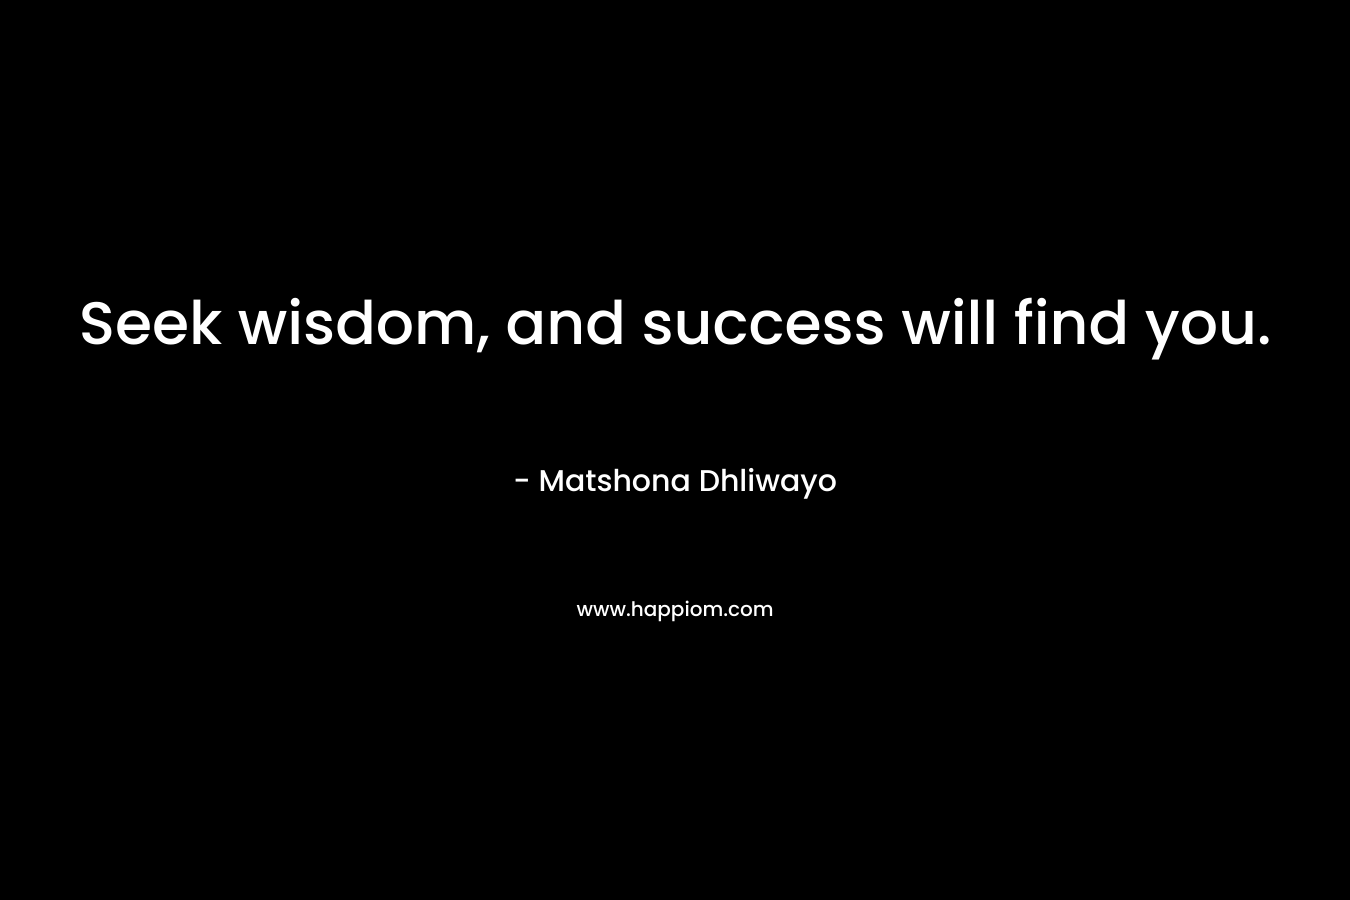 Seek wisdom, and success will find you.